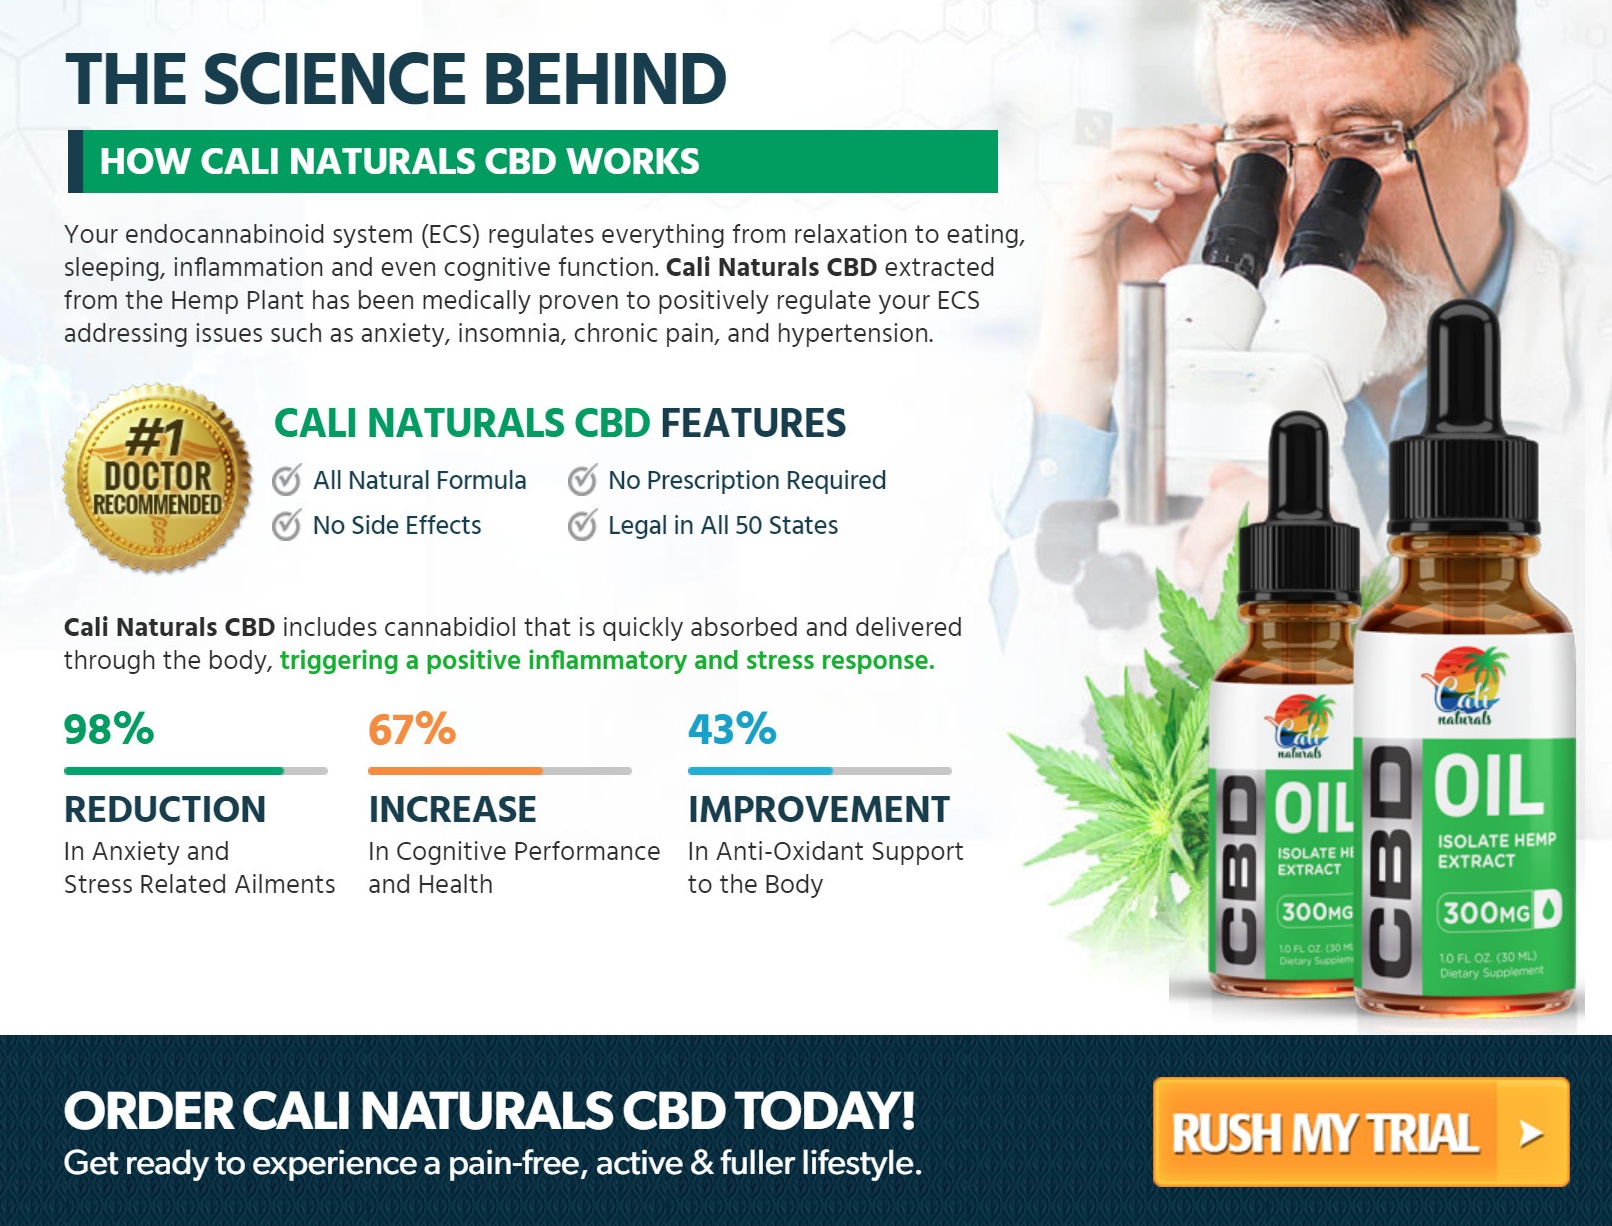 Cali Naturals CBD Oil Science Behind